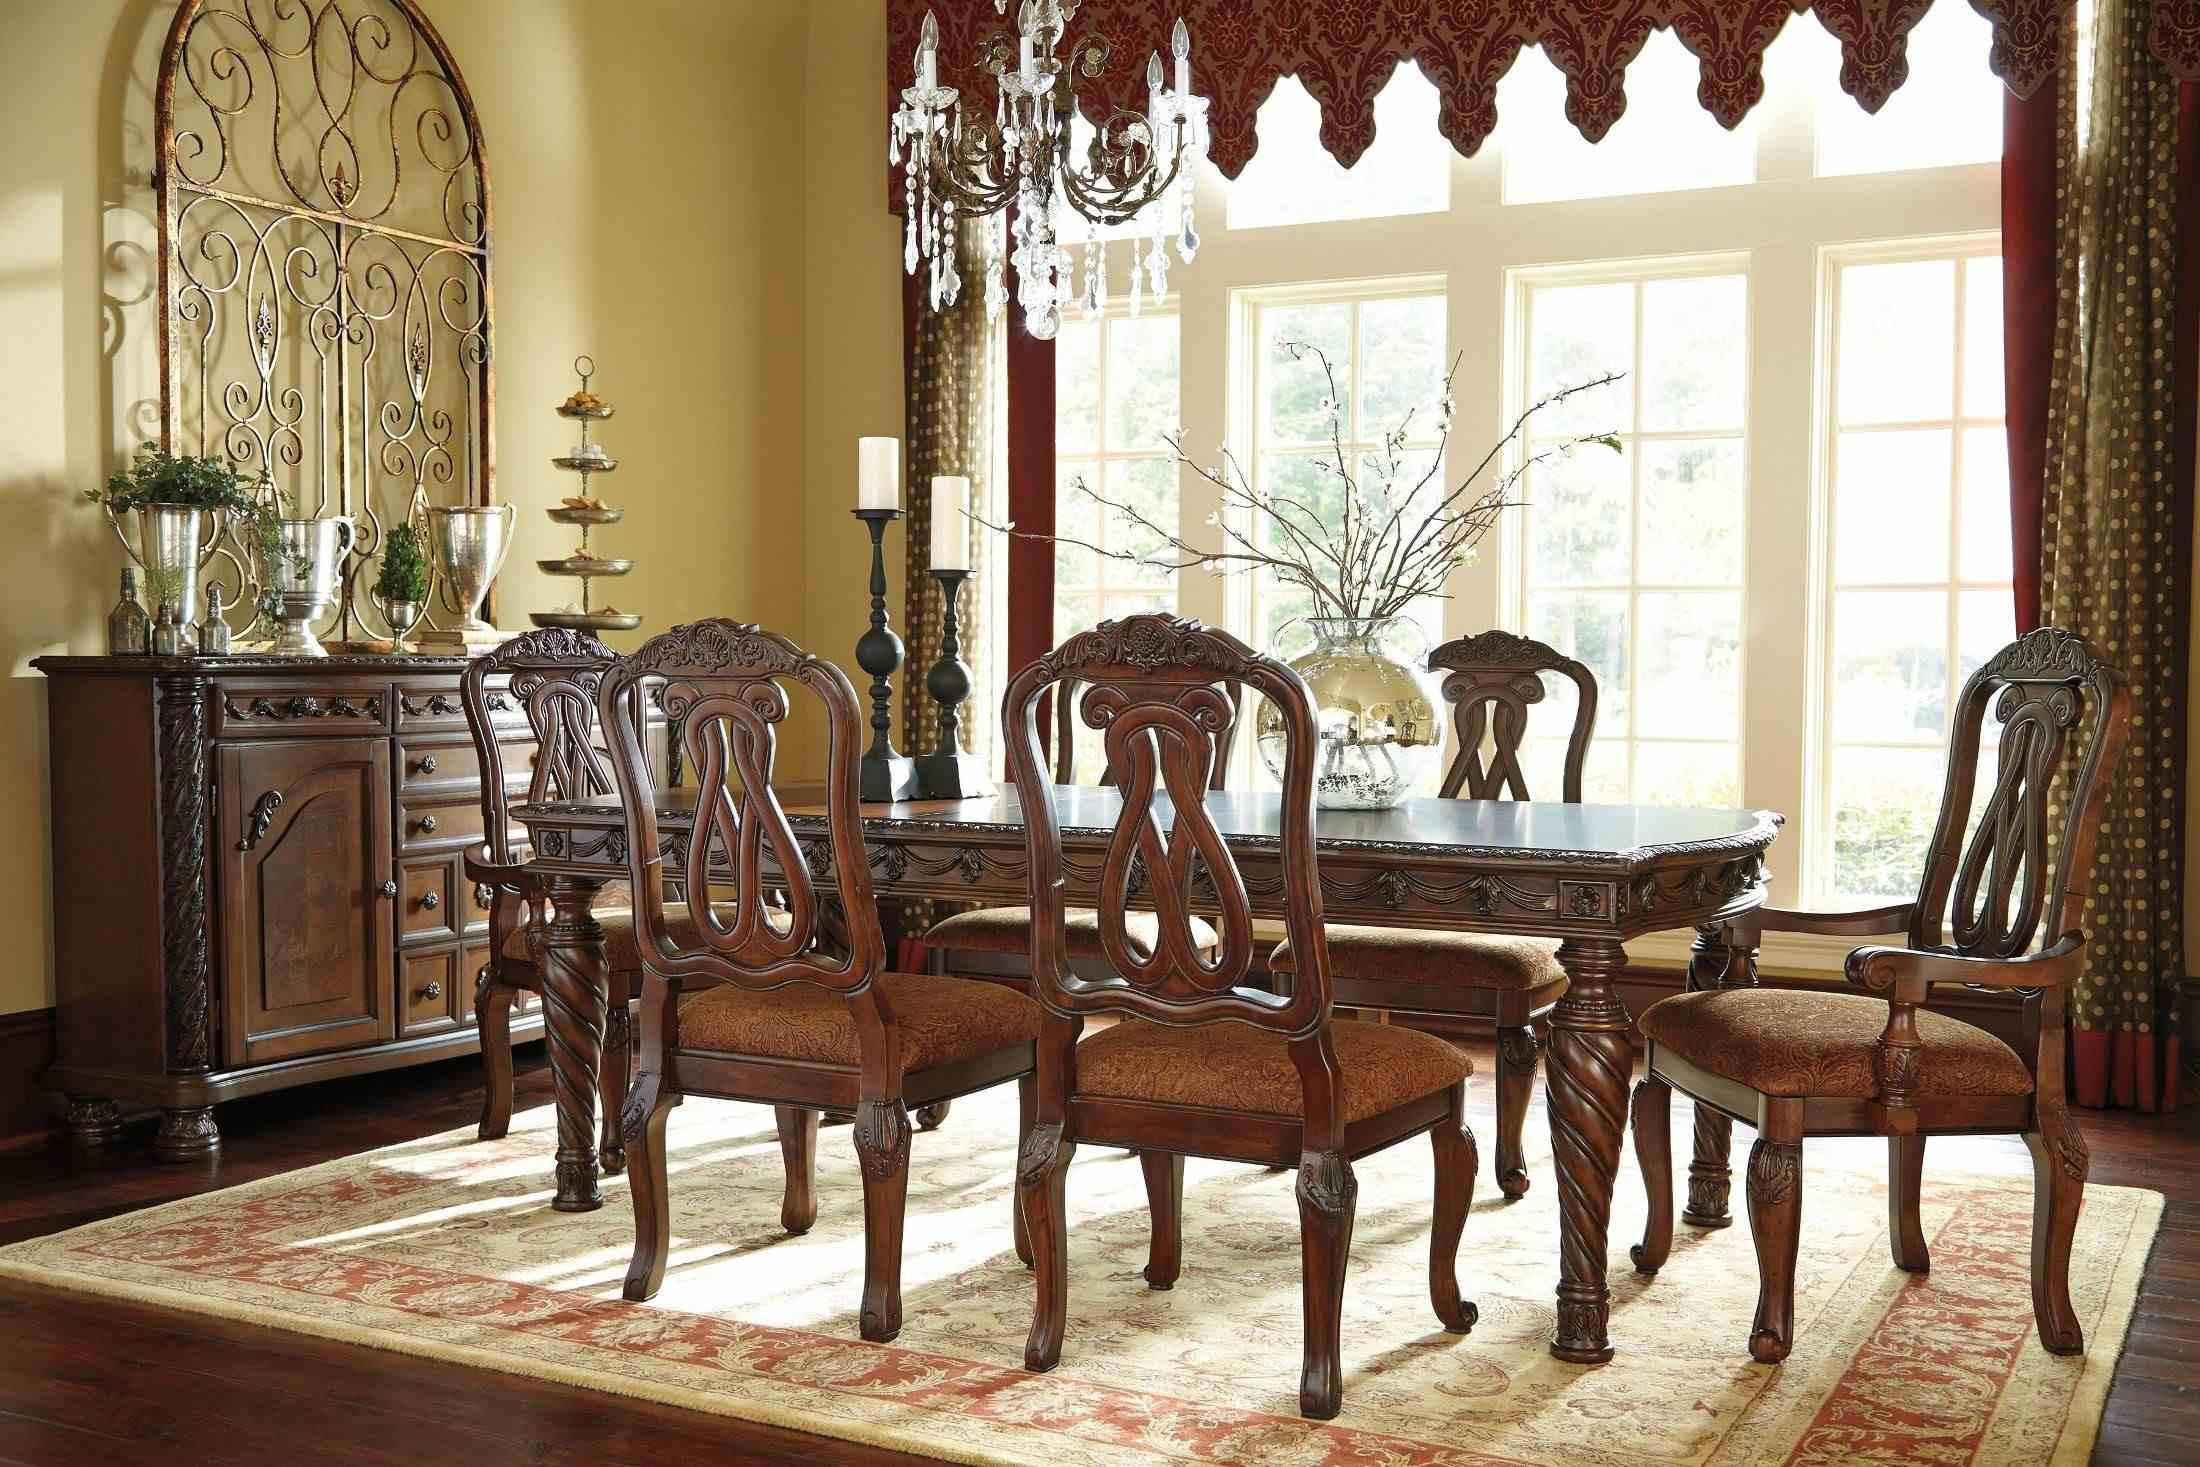 Dining Room Chairs For Sale Kijiji Ottawa